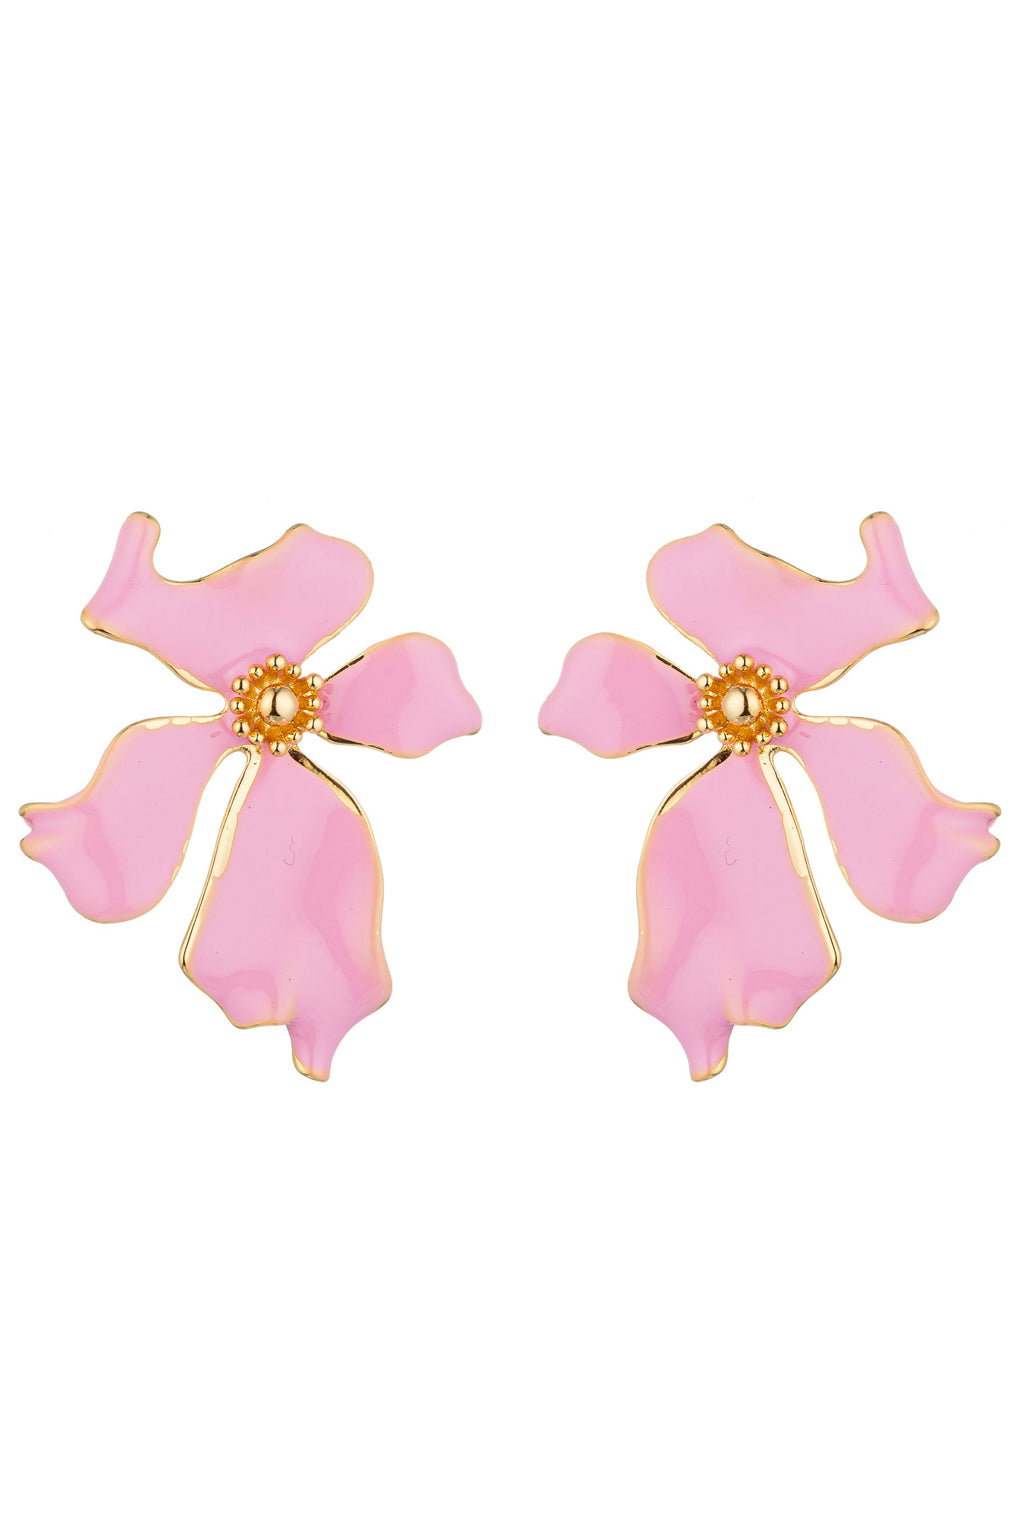 Parisa Pink Enamel Floral Earrings: Blossoming Beauty in Every Petal.